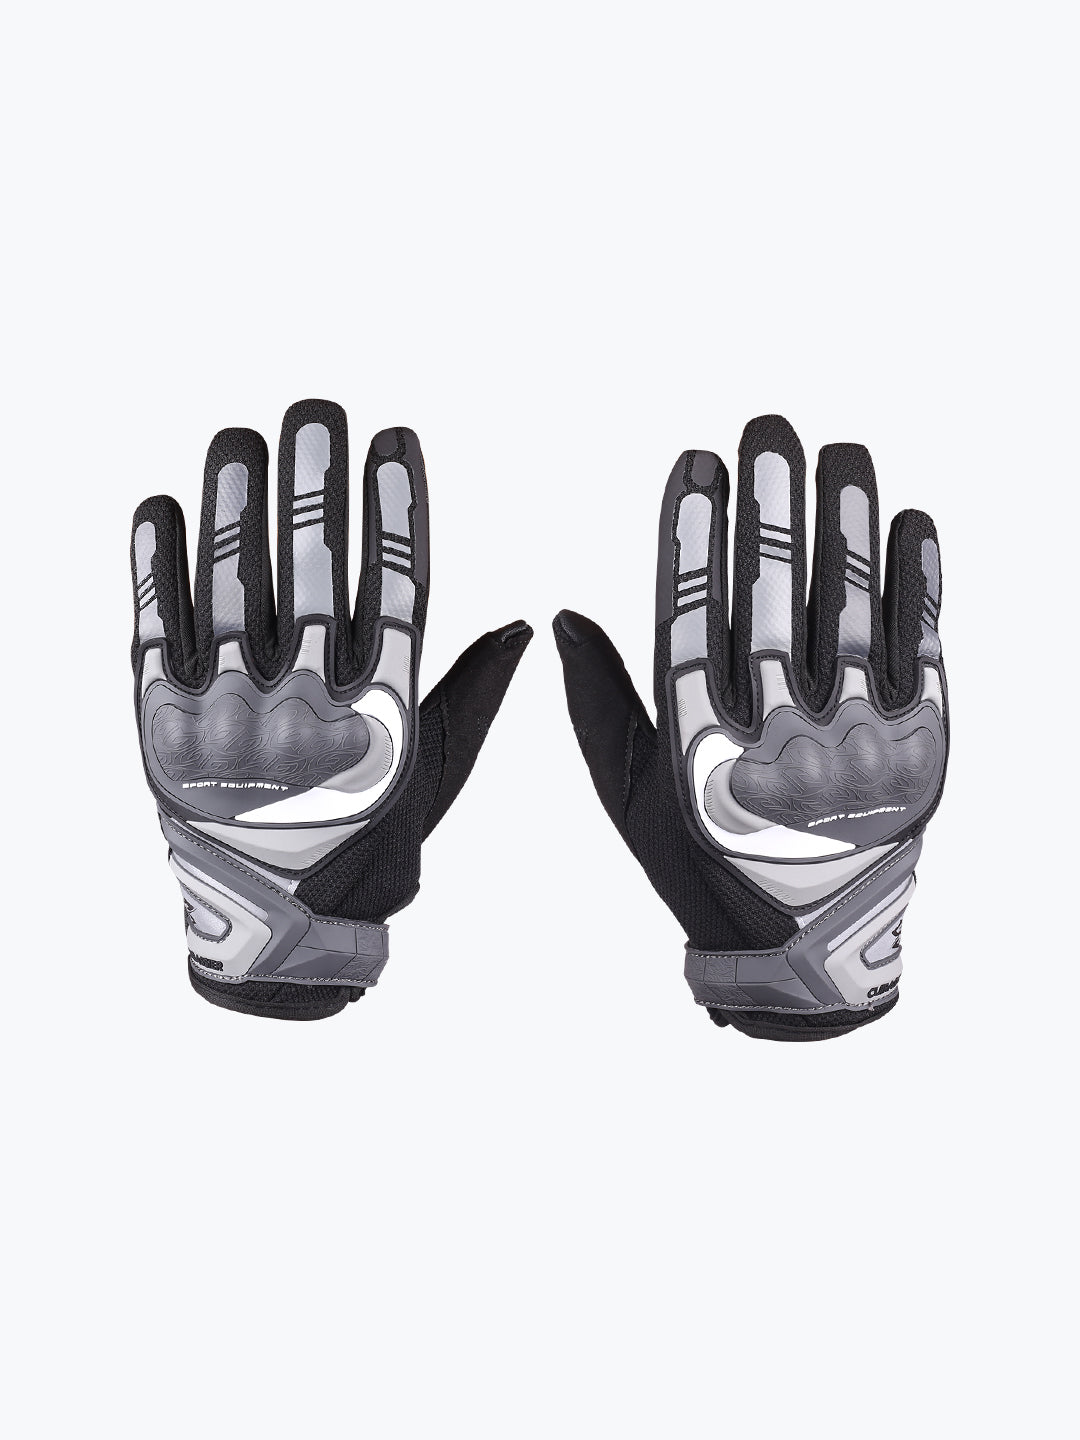 Cuirassier Gloves Black Grey